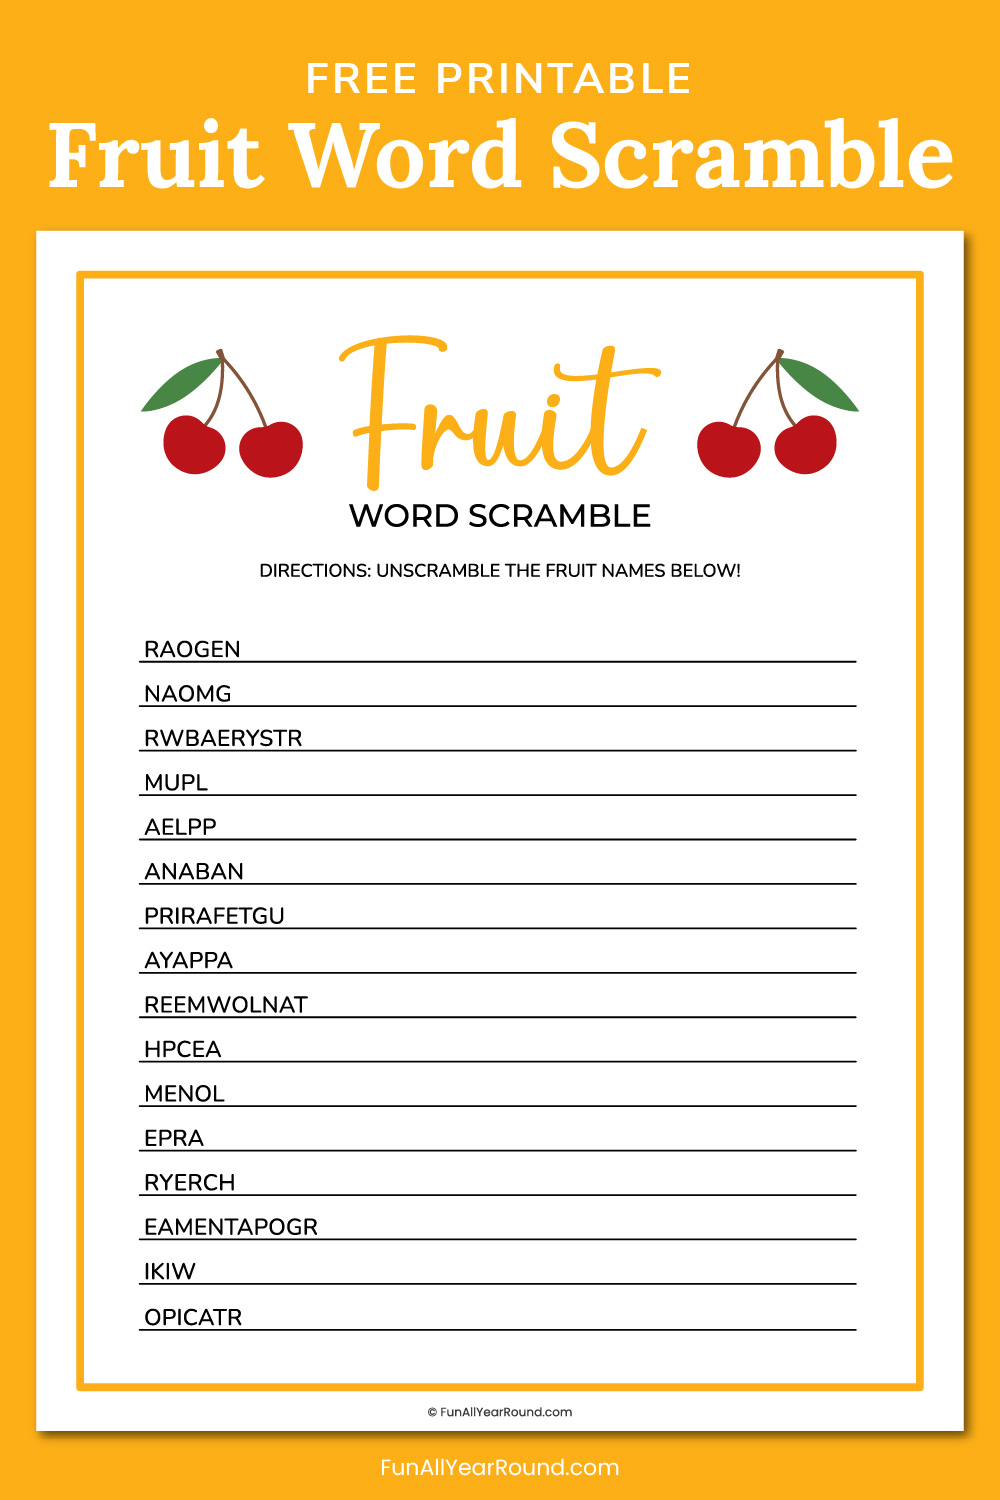 Fruit word scramble